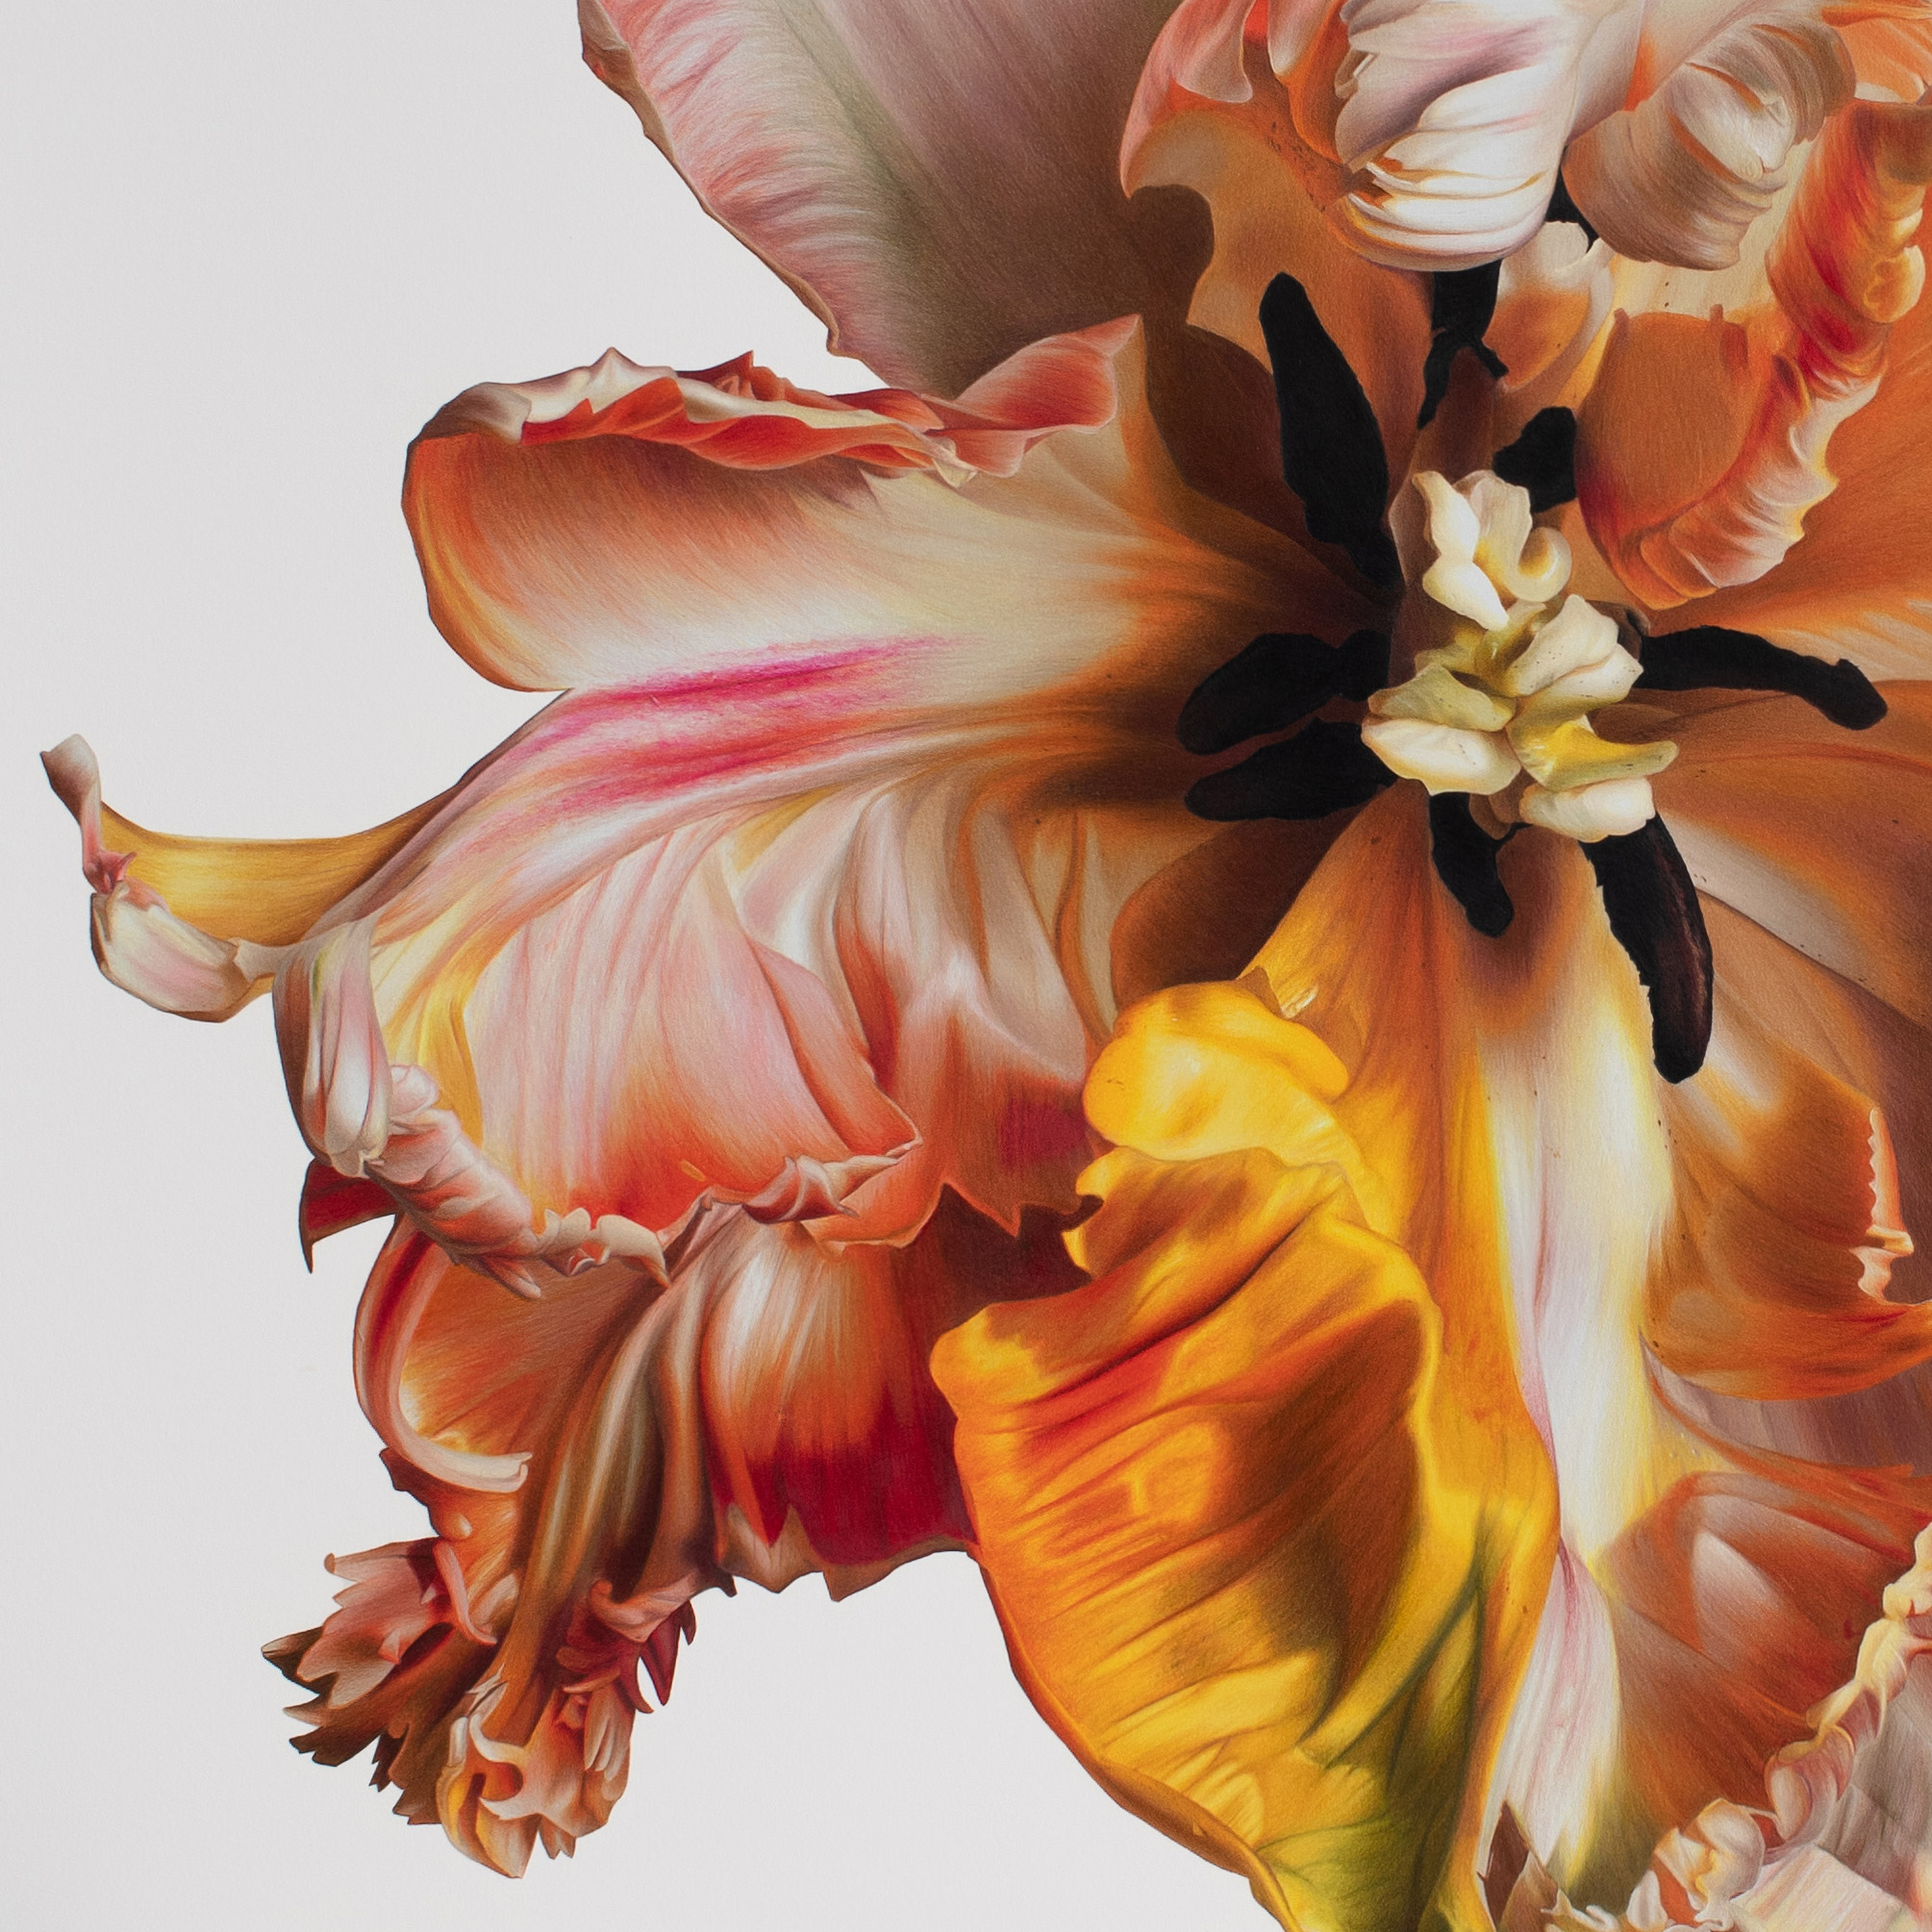 Silky Flowers Emerge from CJ Hendry’s Gigantic Hyperrealistic Drawings Flower Art